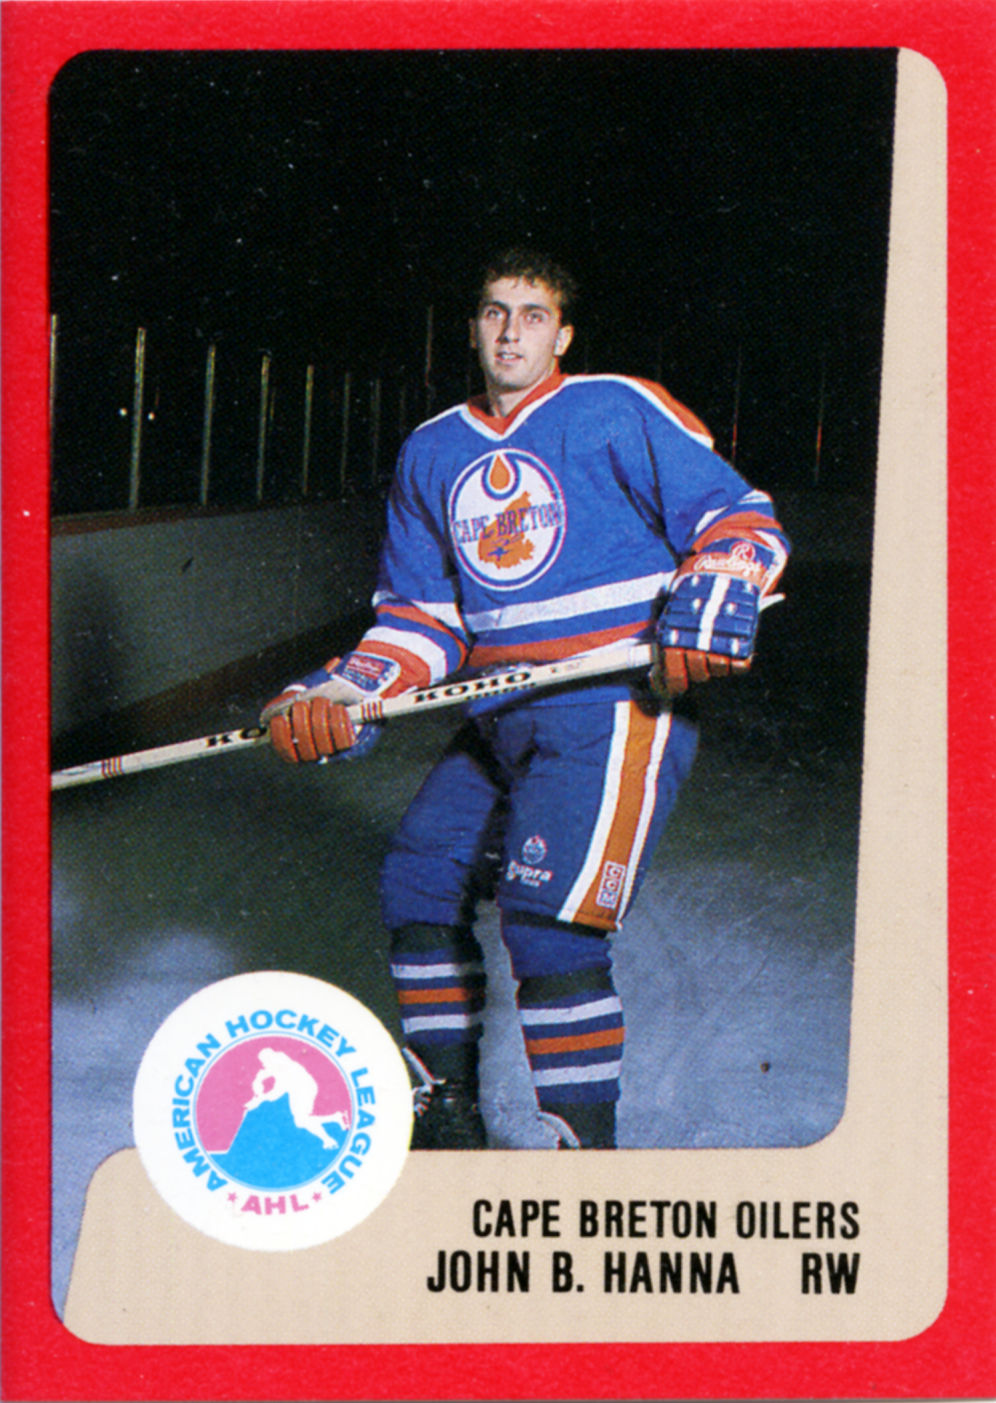 Cape Breton Oilers 1988-89 hockey card image